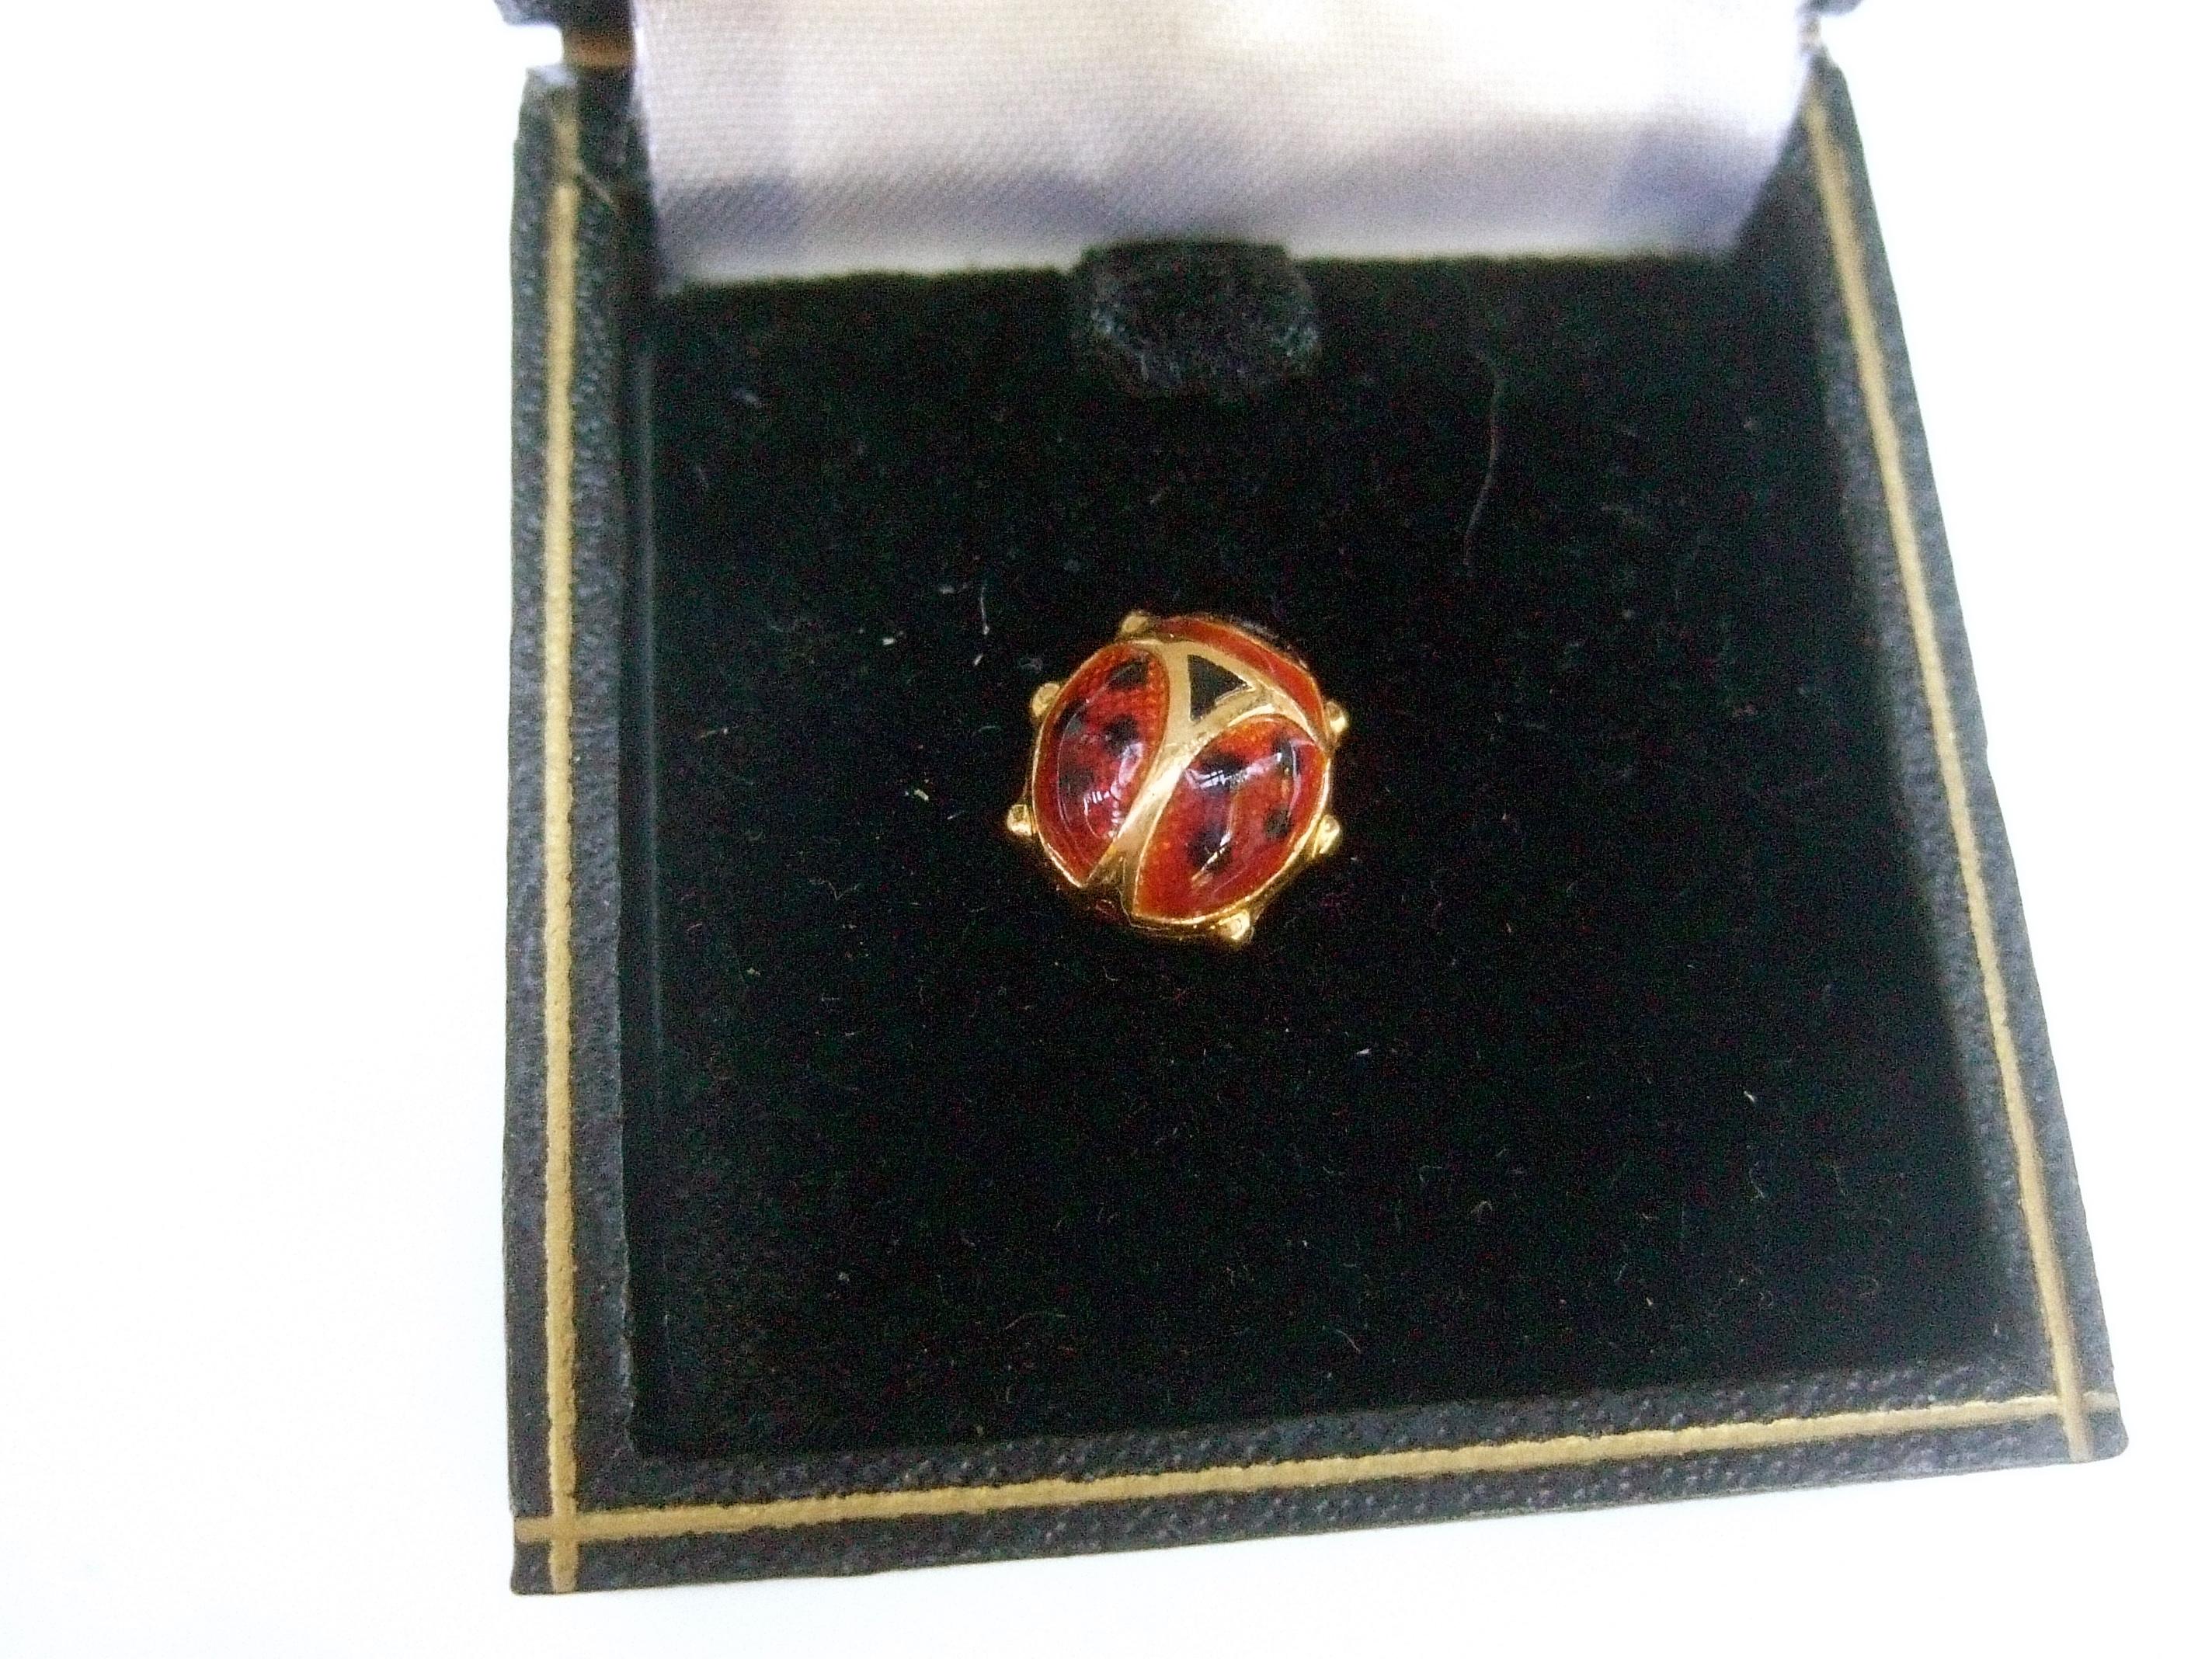 Artisan Charming 18k Gold Tiny Italian Enamel Ladybug Tie Tack or Lapel Pin c 1980s